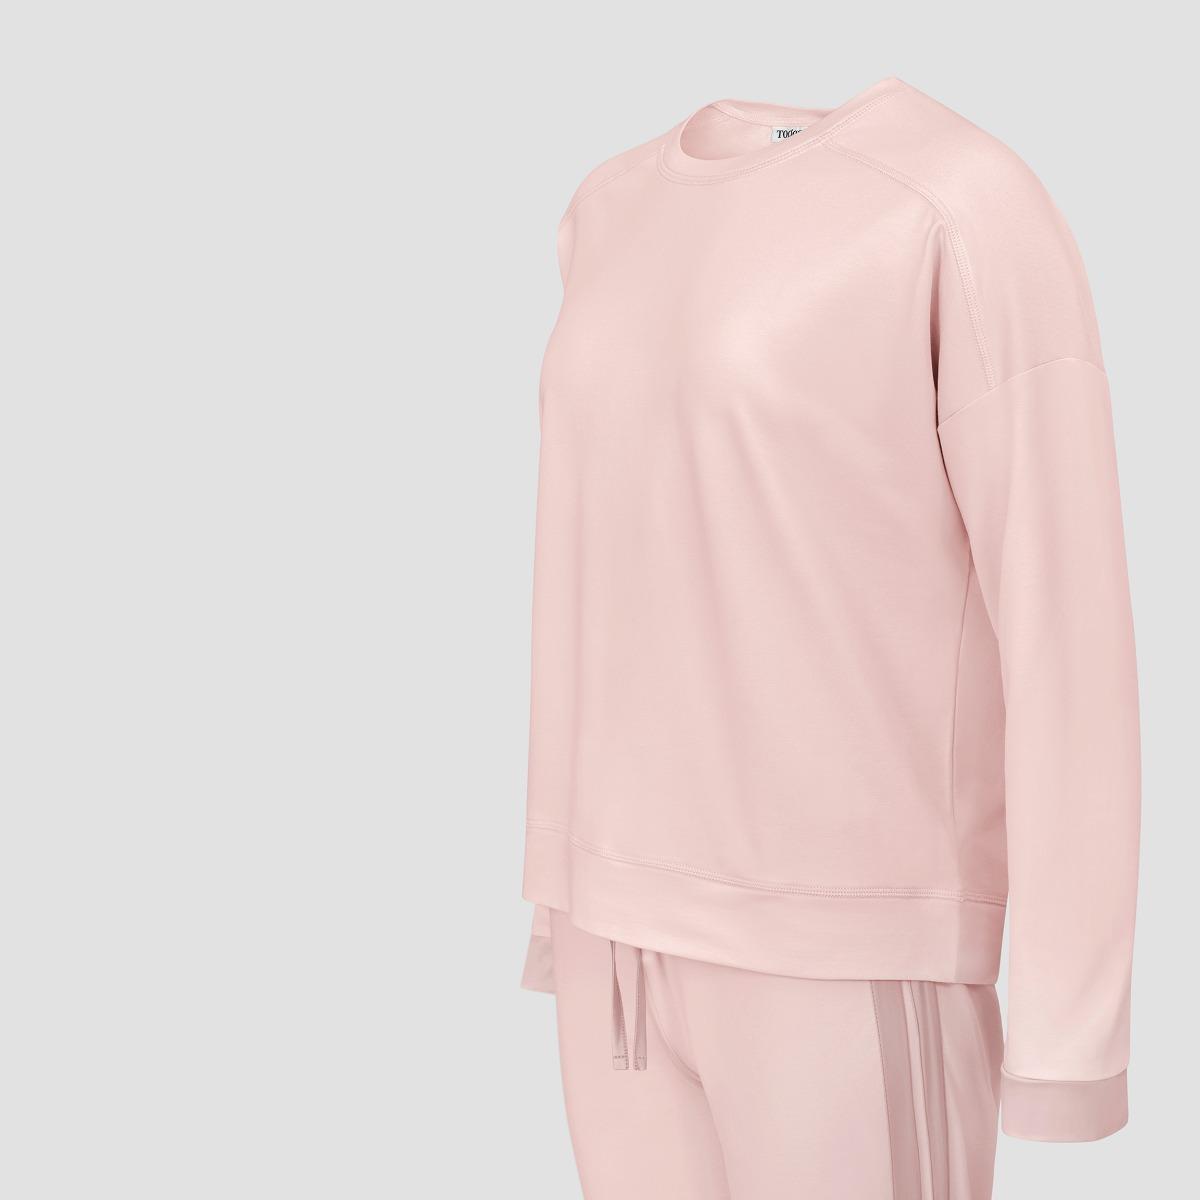 Пижама Togas Рене розовая женская s(44), цвет розовый, размер S (44) - фото 2